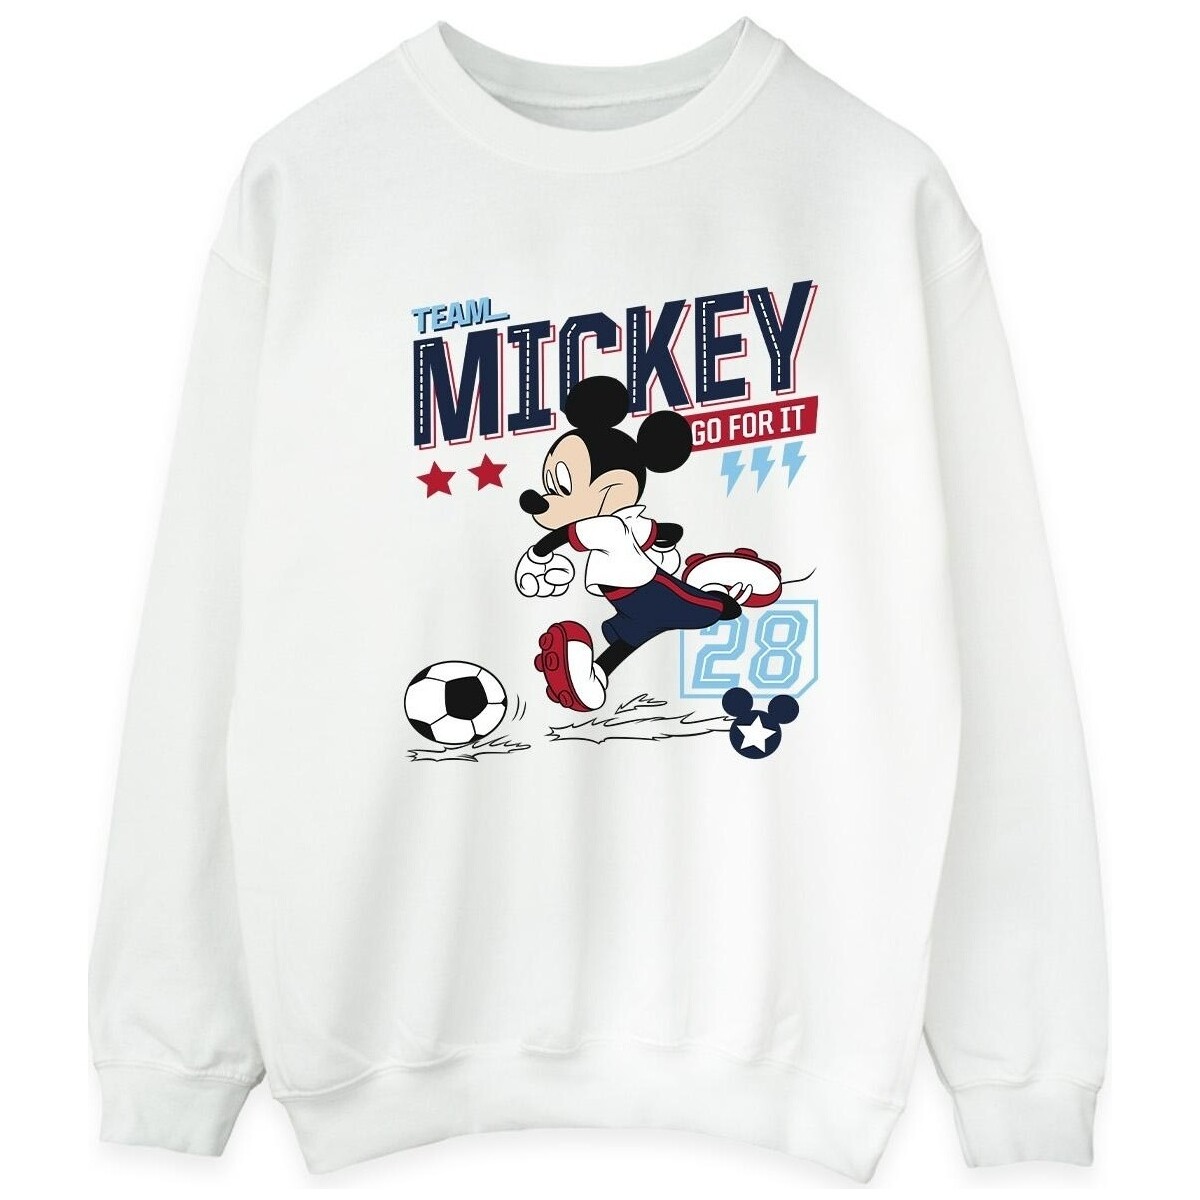 Abbigliamento Uomo Felpe Disney Mickey Mouse Team Mickey Football Bianco